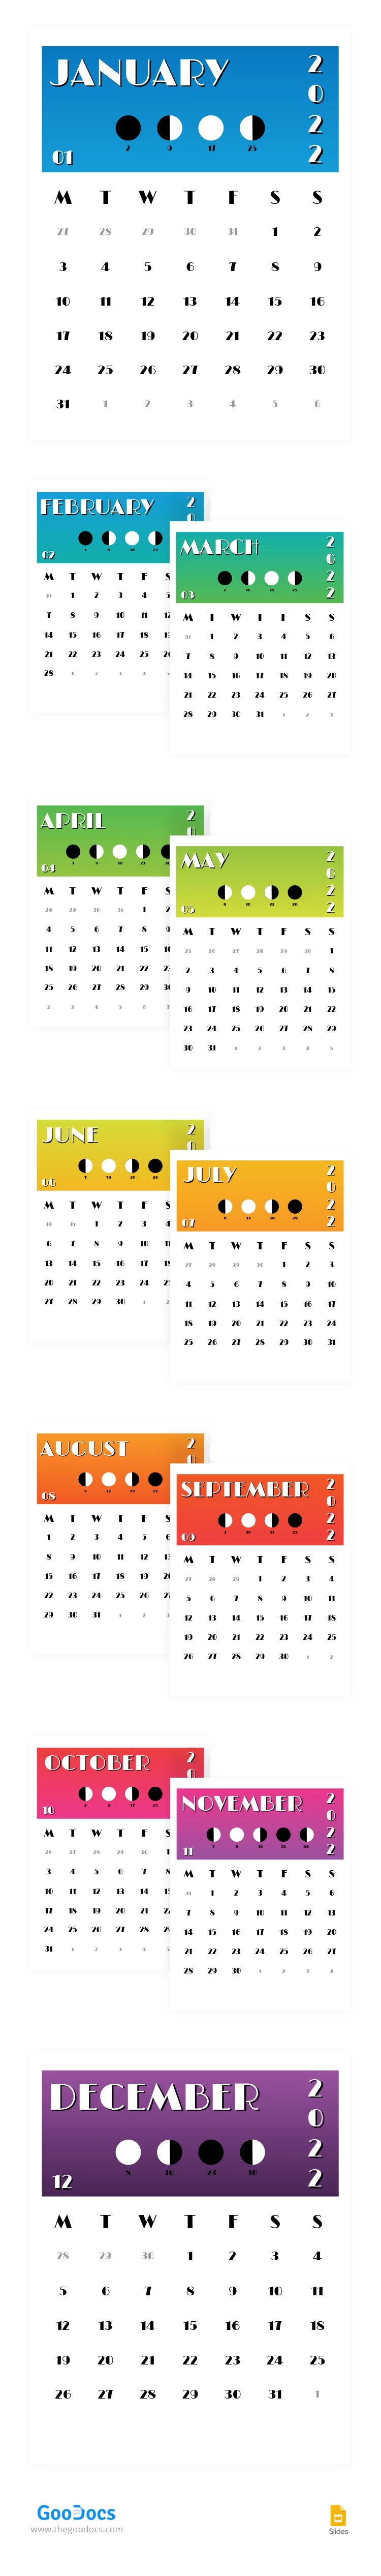 Calendario semplice a gradienti - free Google Docs Template - 10063805